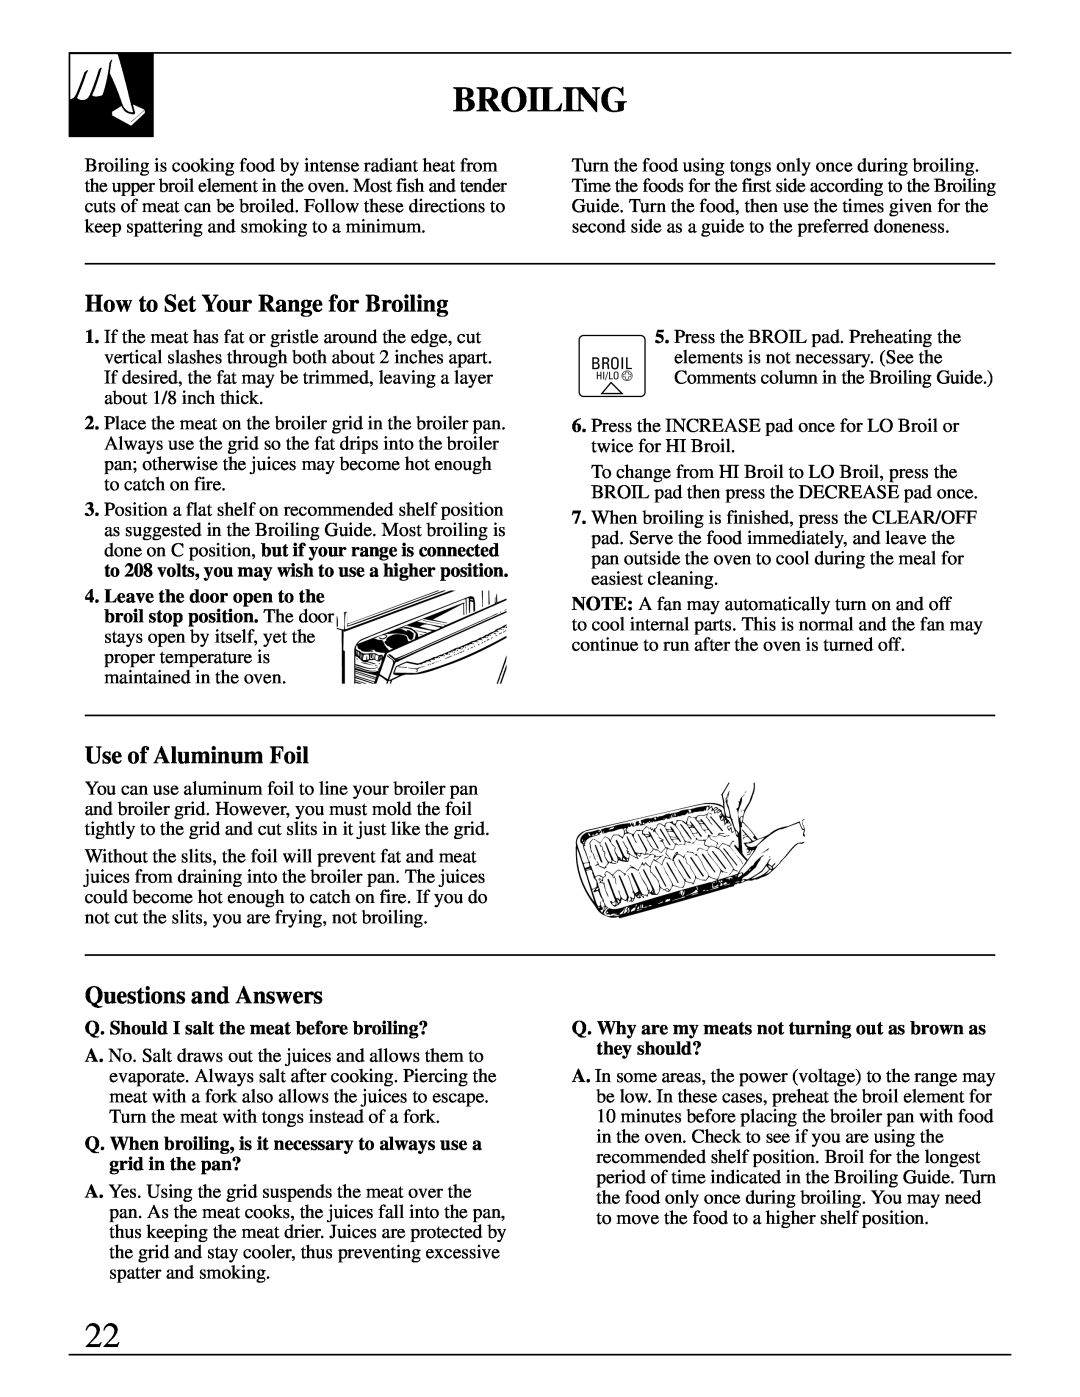 GE JSP31, JSP34, JSP26, JSP28 manual How to Set Your Range for Broiling, Use of Aluminum Foil, Questions and Answers 